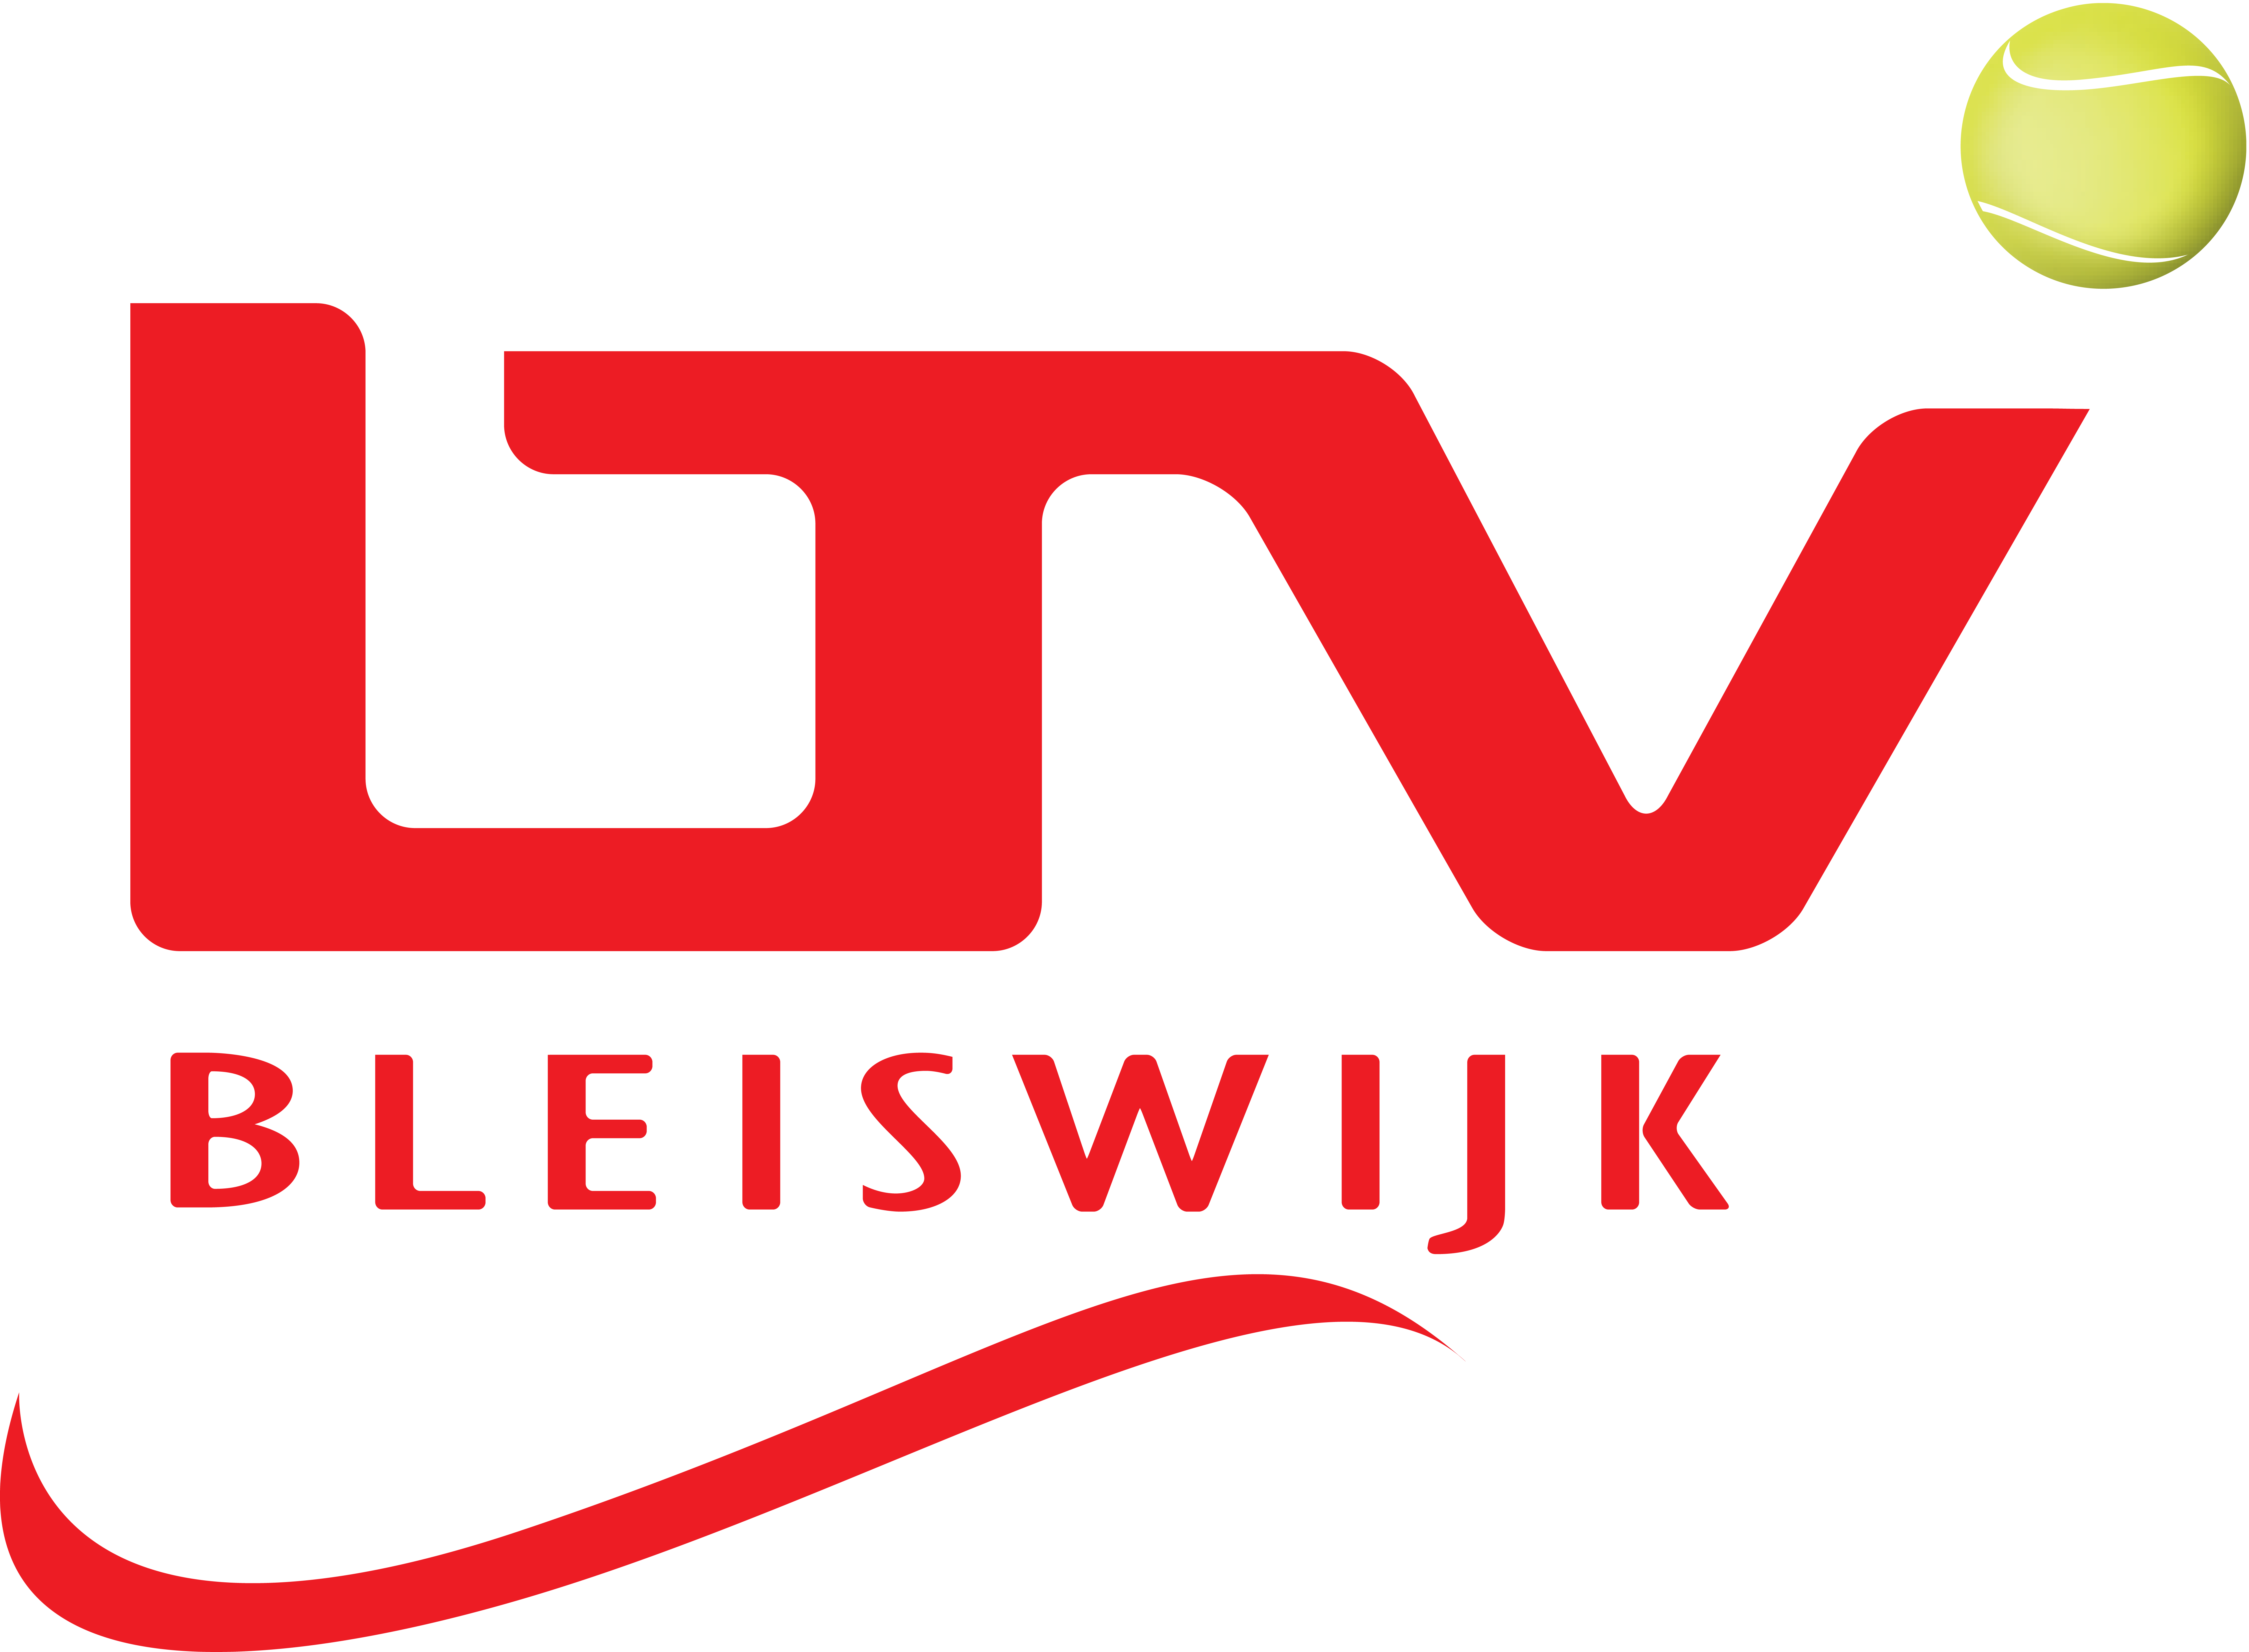 Profile image of venue LTV Bleiswijk